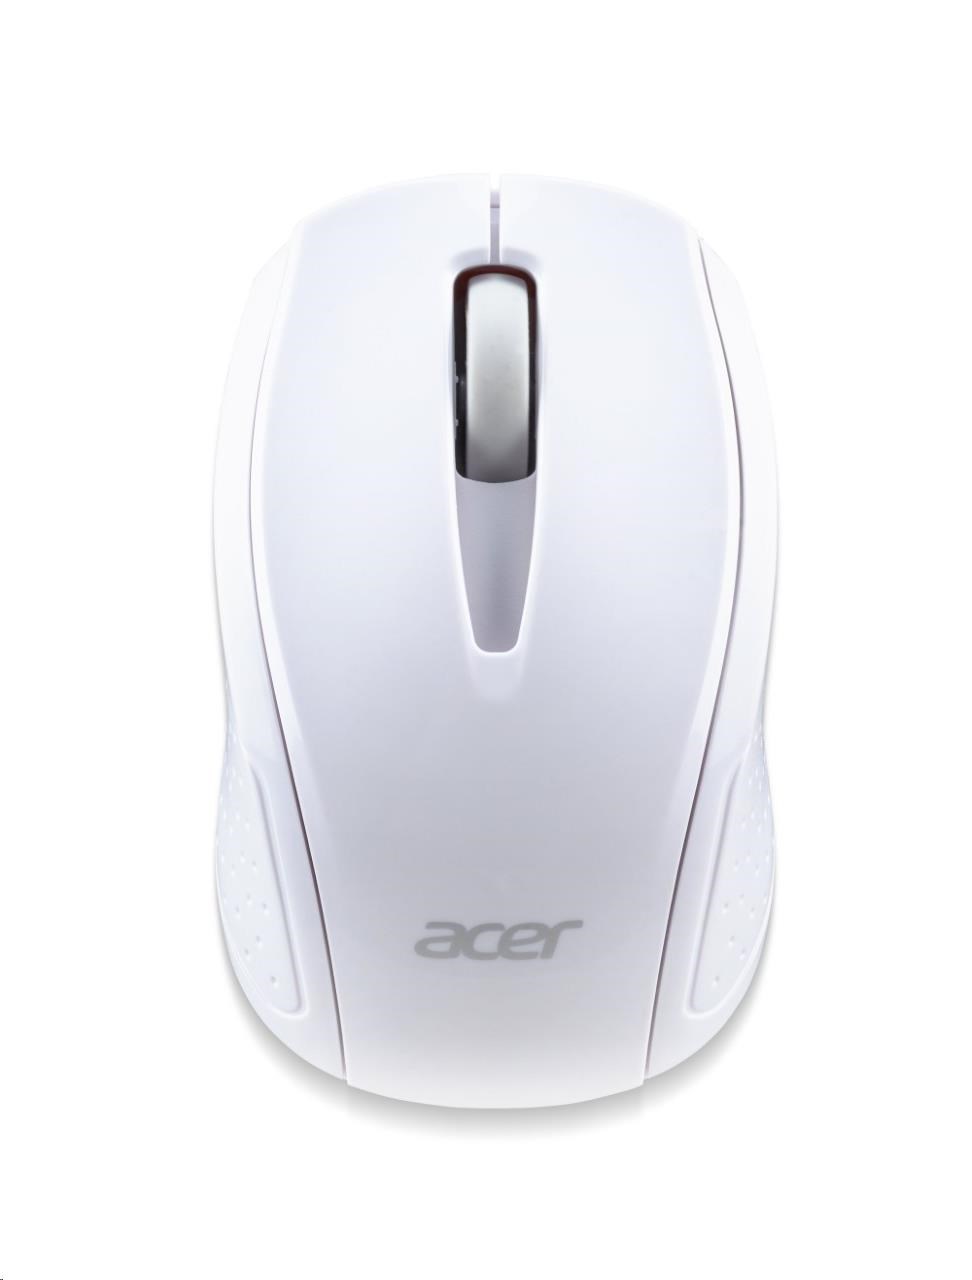 Bezdrôtová myš ACER G69 White - RF2.4G,  1600 dpi,  95x58x35 mm,  dosah 10 m,  2x AAA,  Win/ Chrome/ Mac,  maloobchodné balenie0 